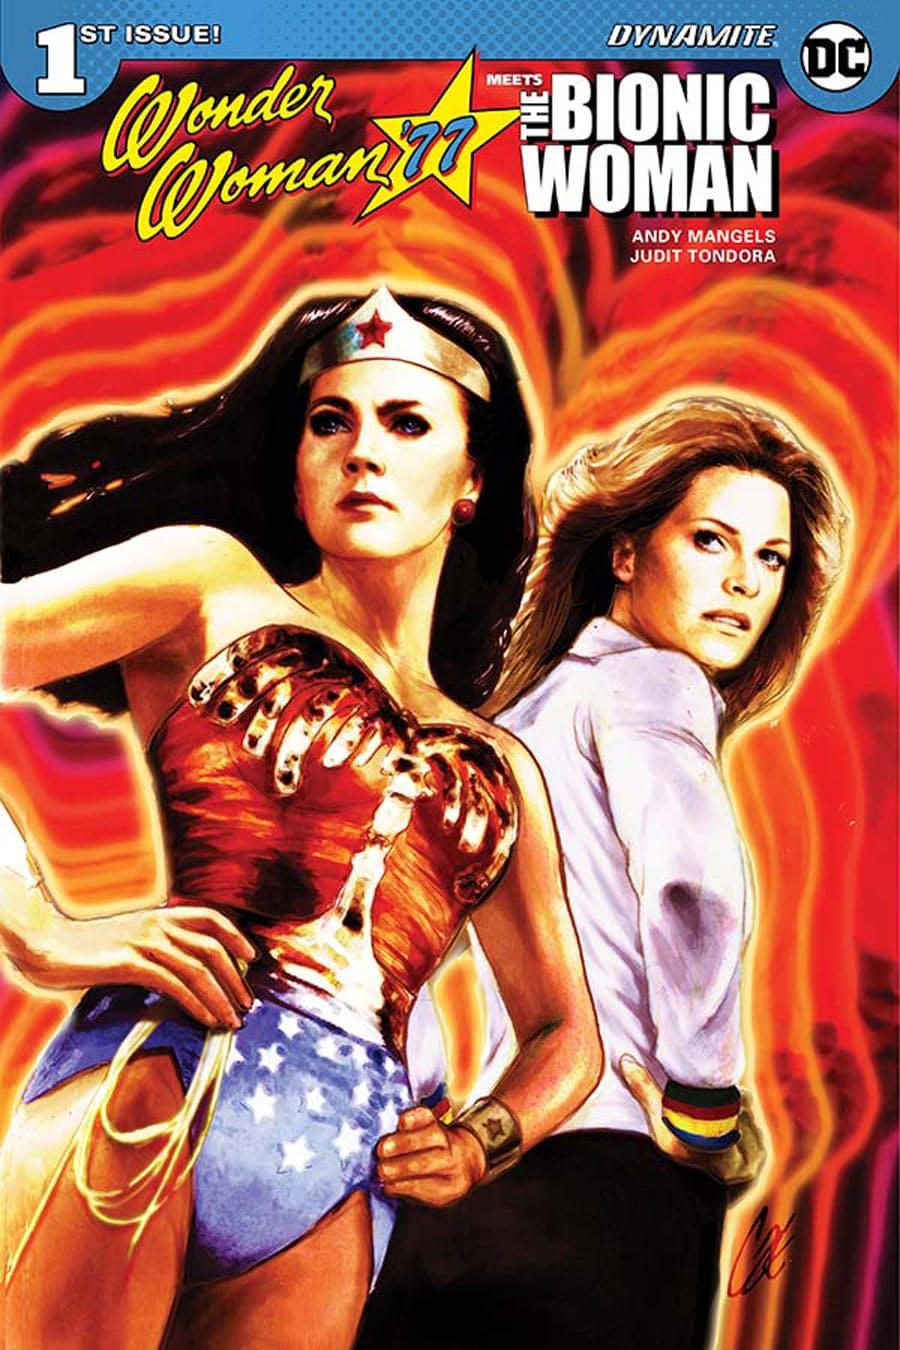 Wonder Woman '77 Meets the Bionic Woman Vol. 1 #1